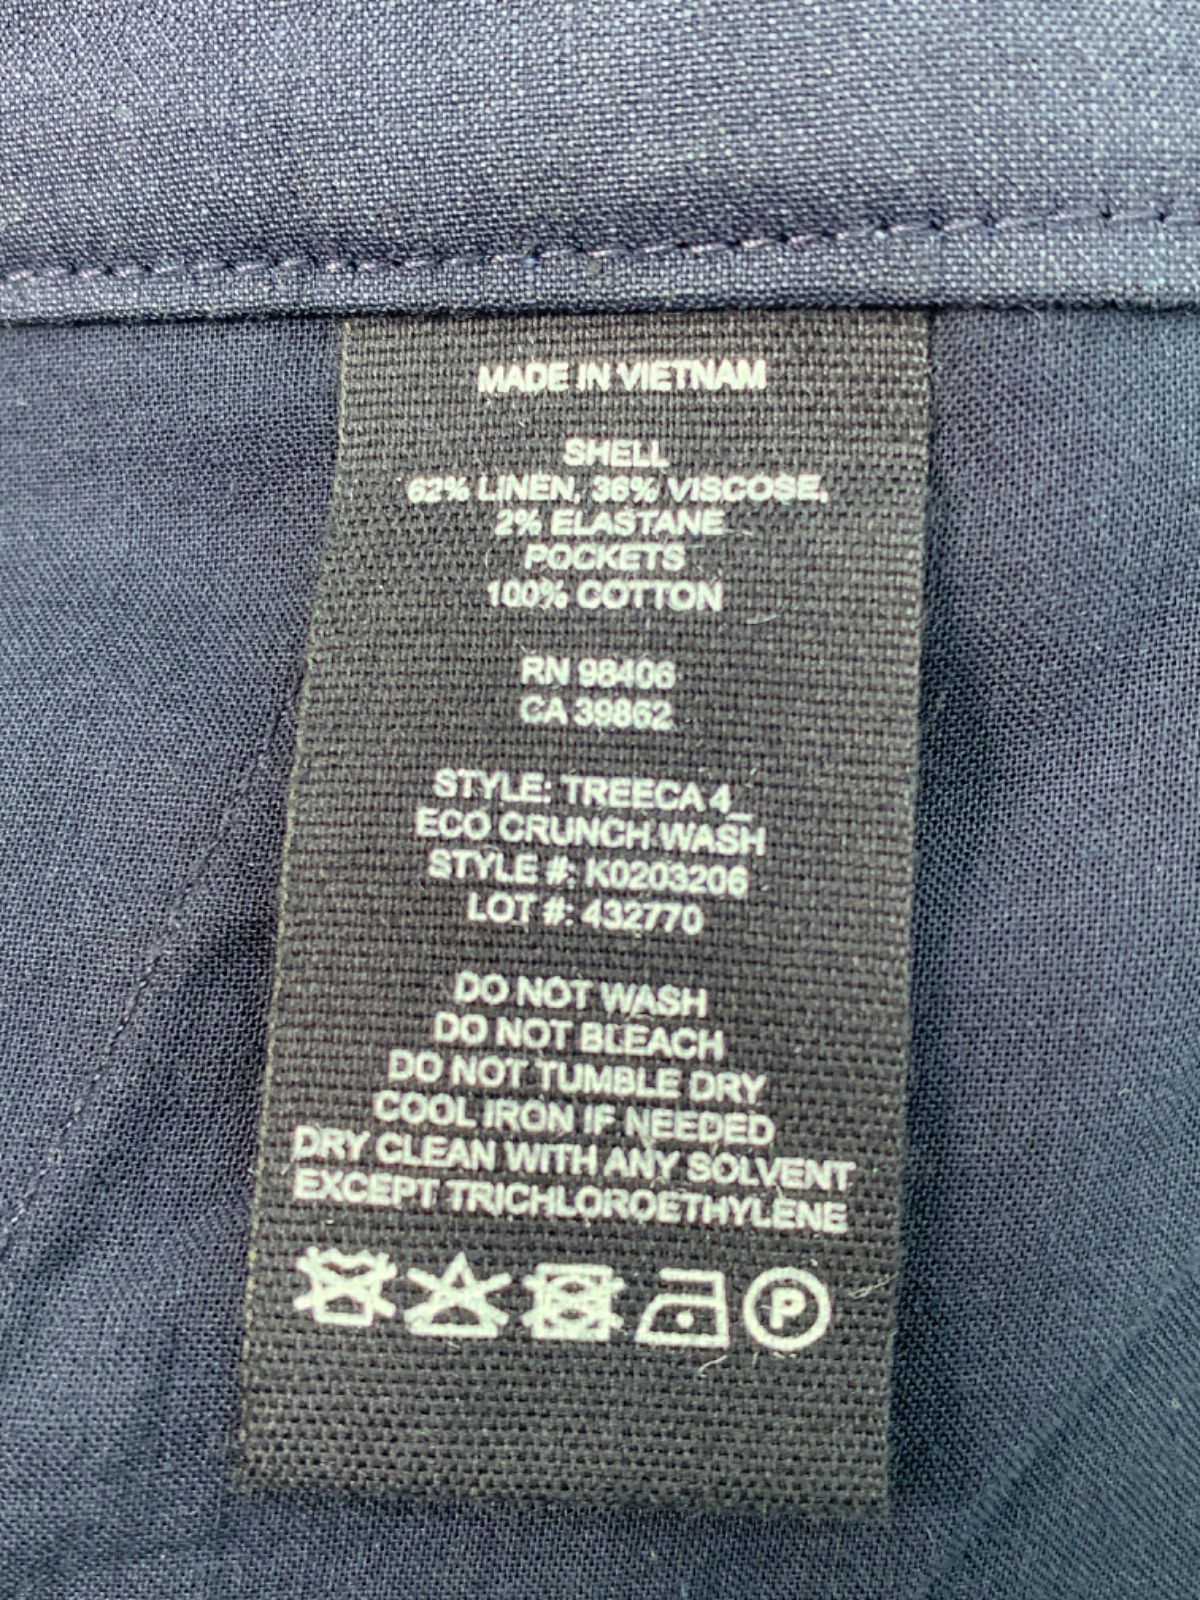 Theory Navy Treeca 4 Eco Crunch Wash Trousers UK 8